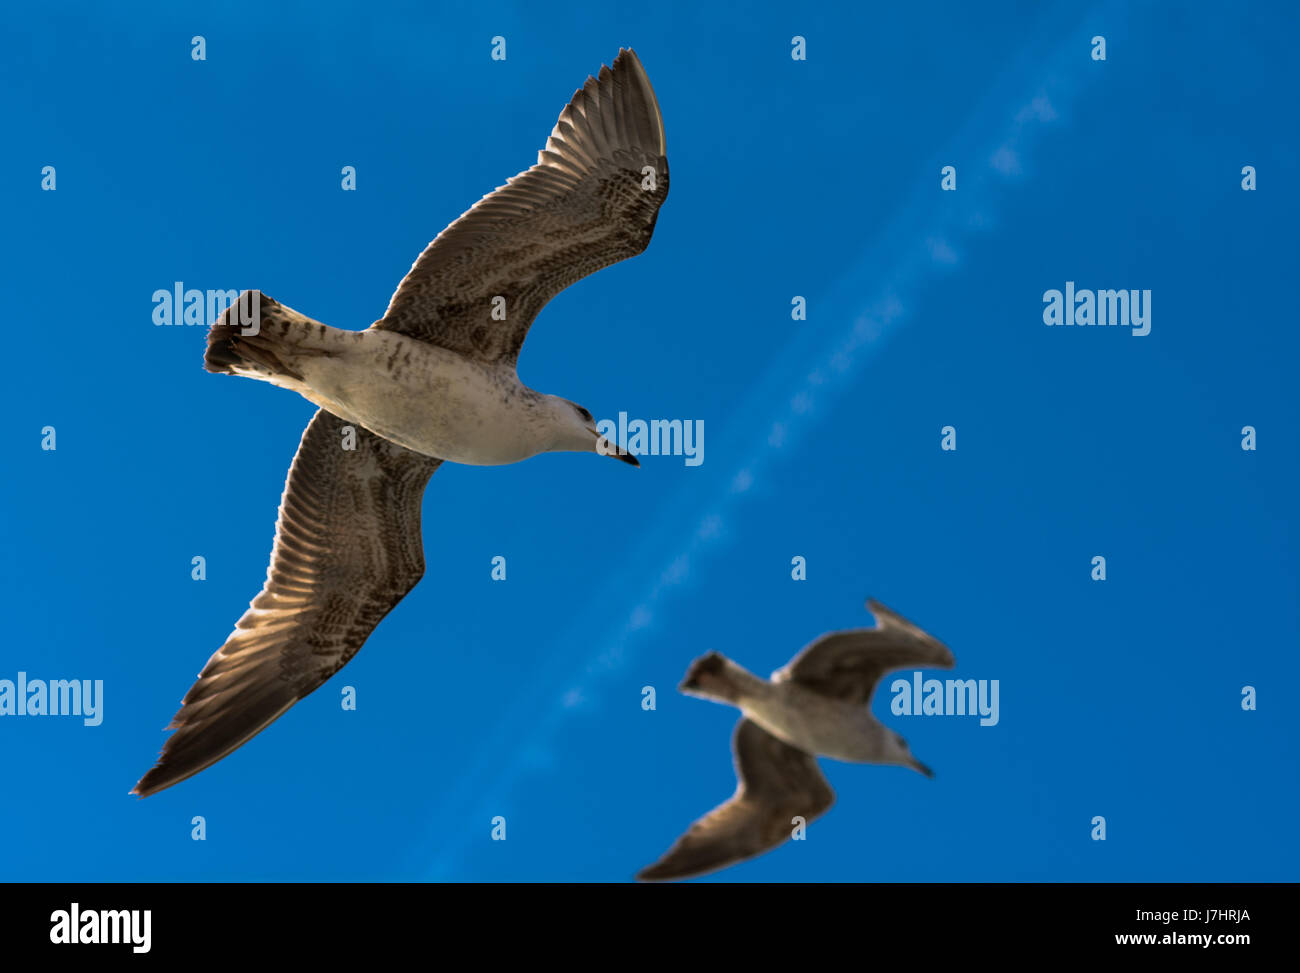 Flying seagulls Stock Photo